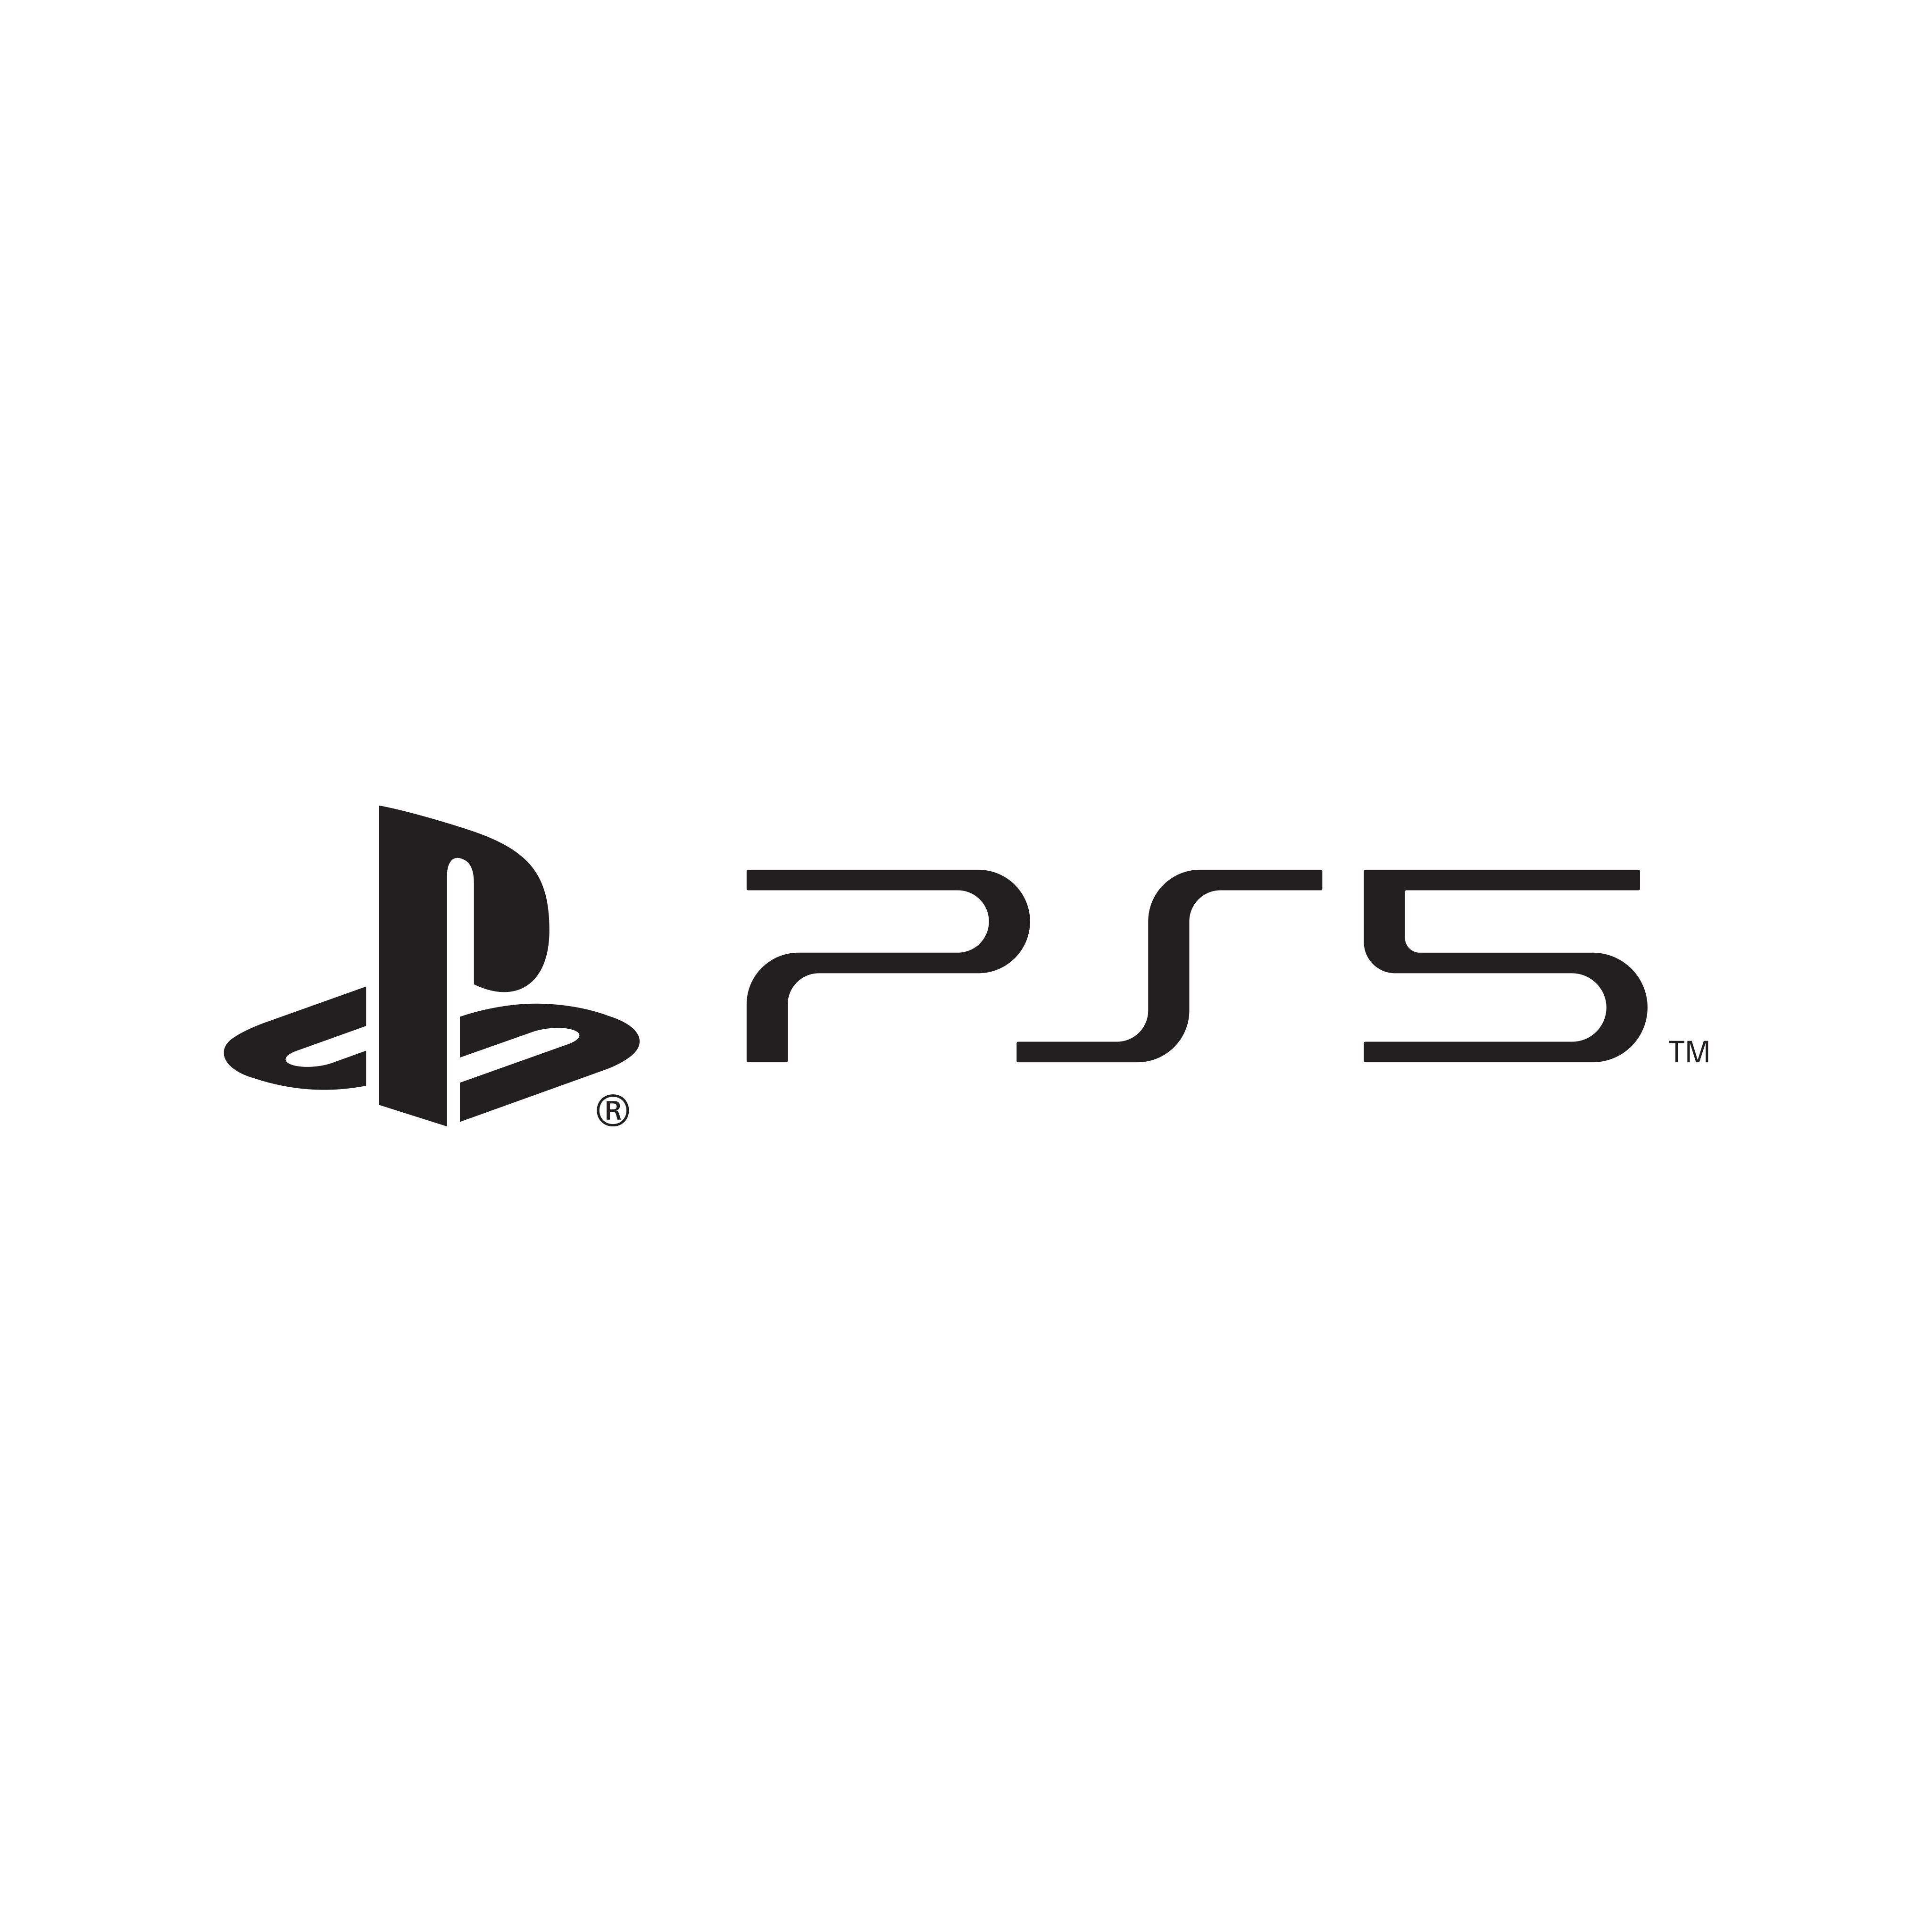 Ps5 Logo PNG File